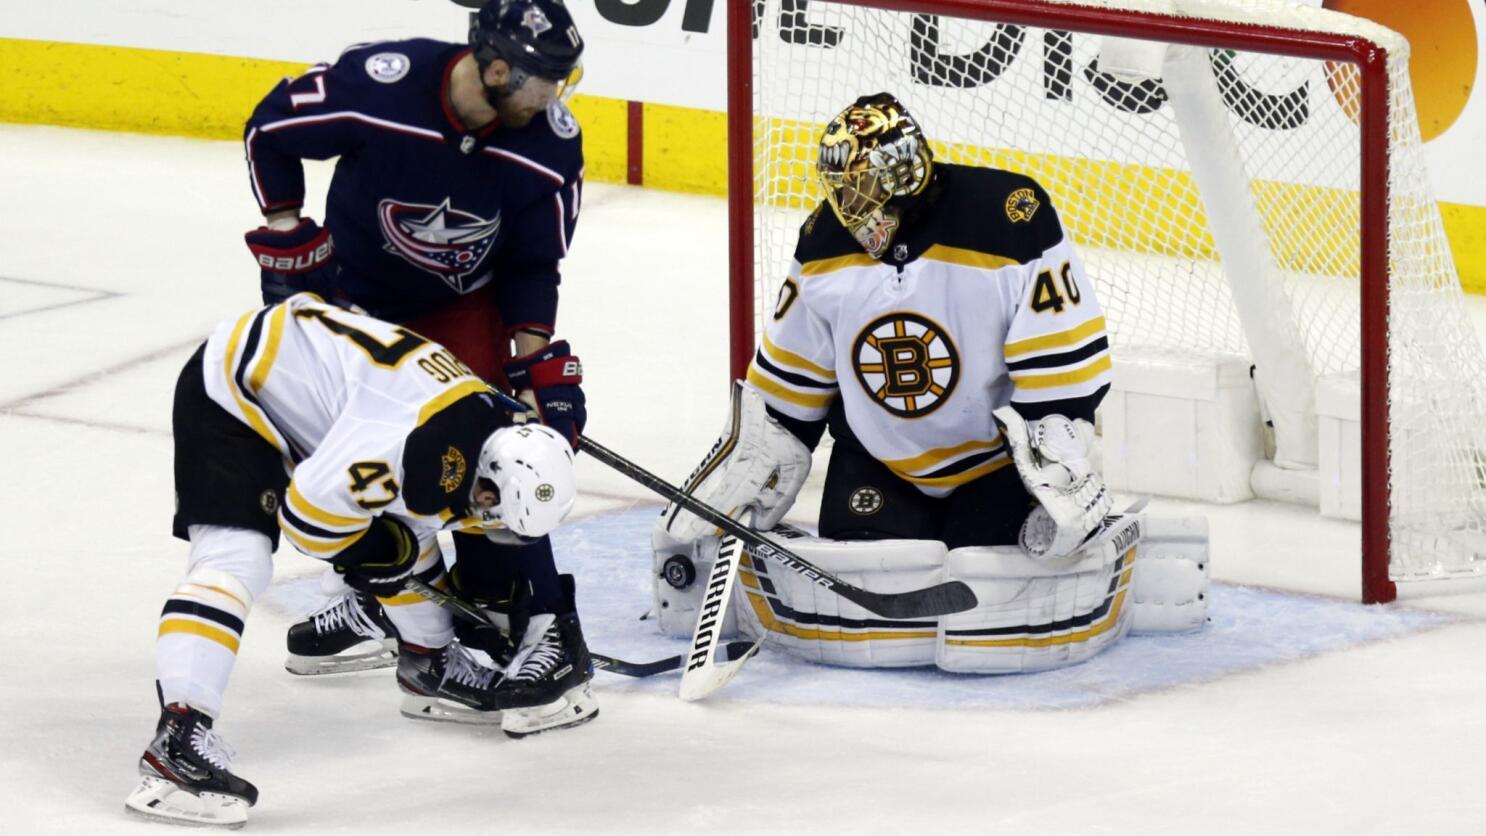 Boston Bruins: Tuukka Rask Among Top Goaltenders This Season